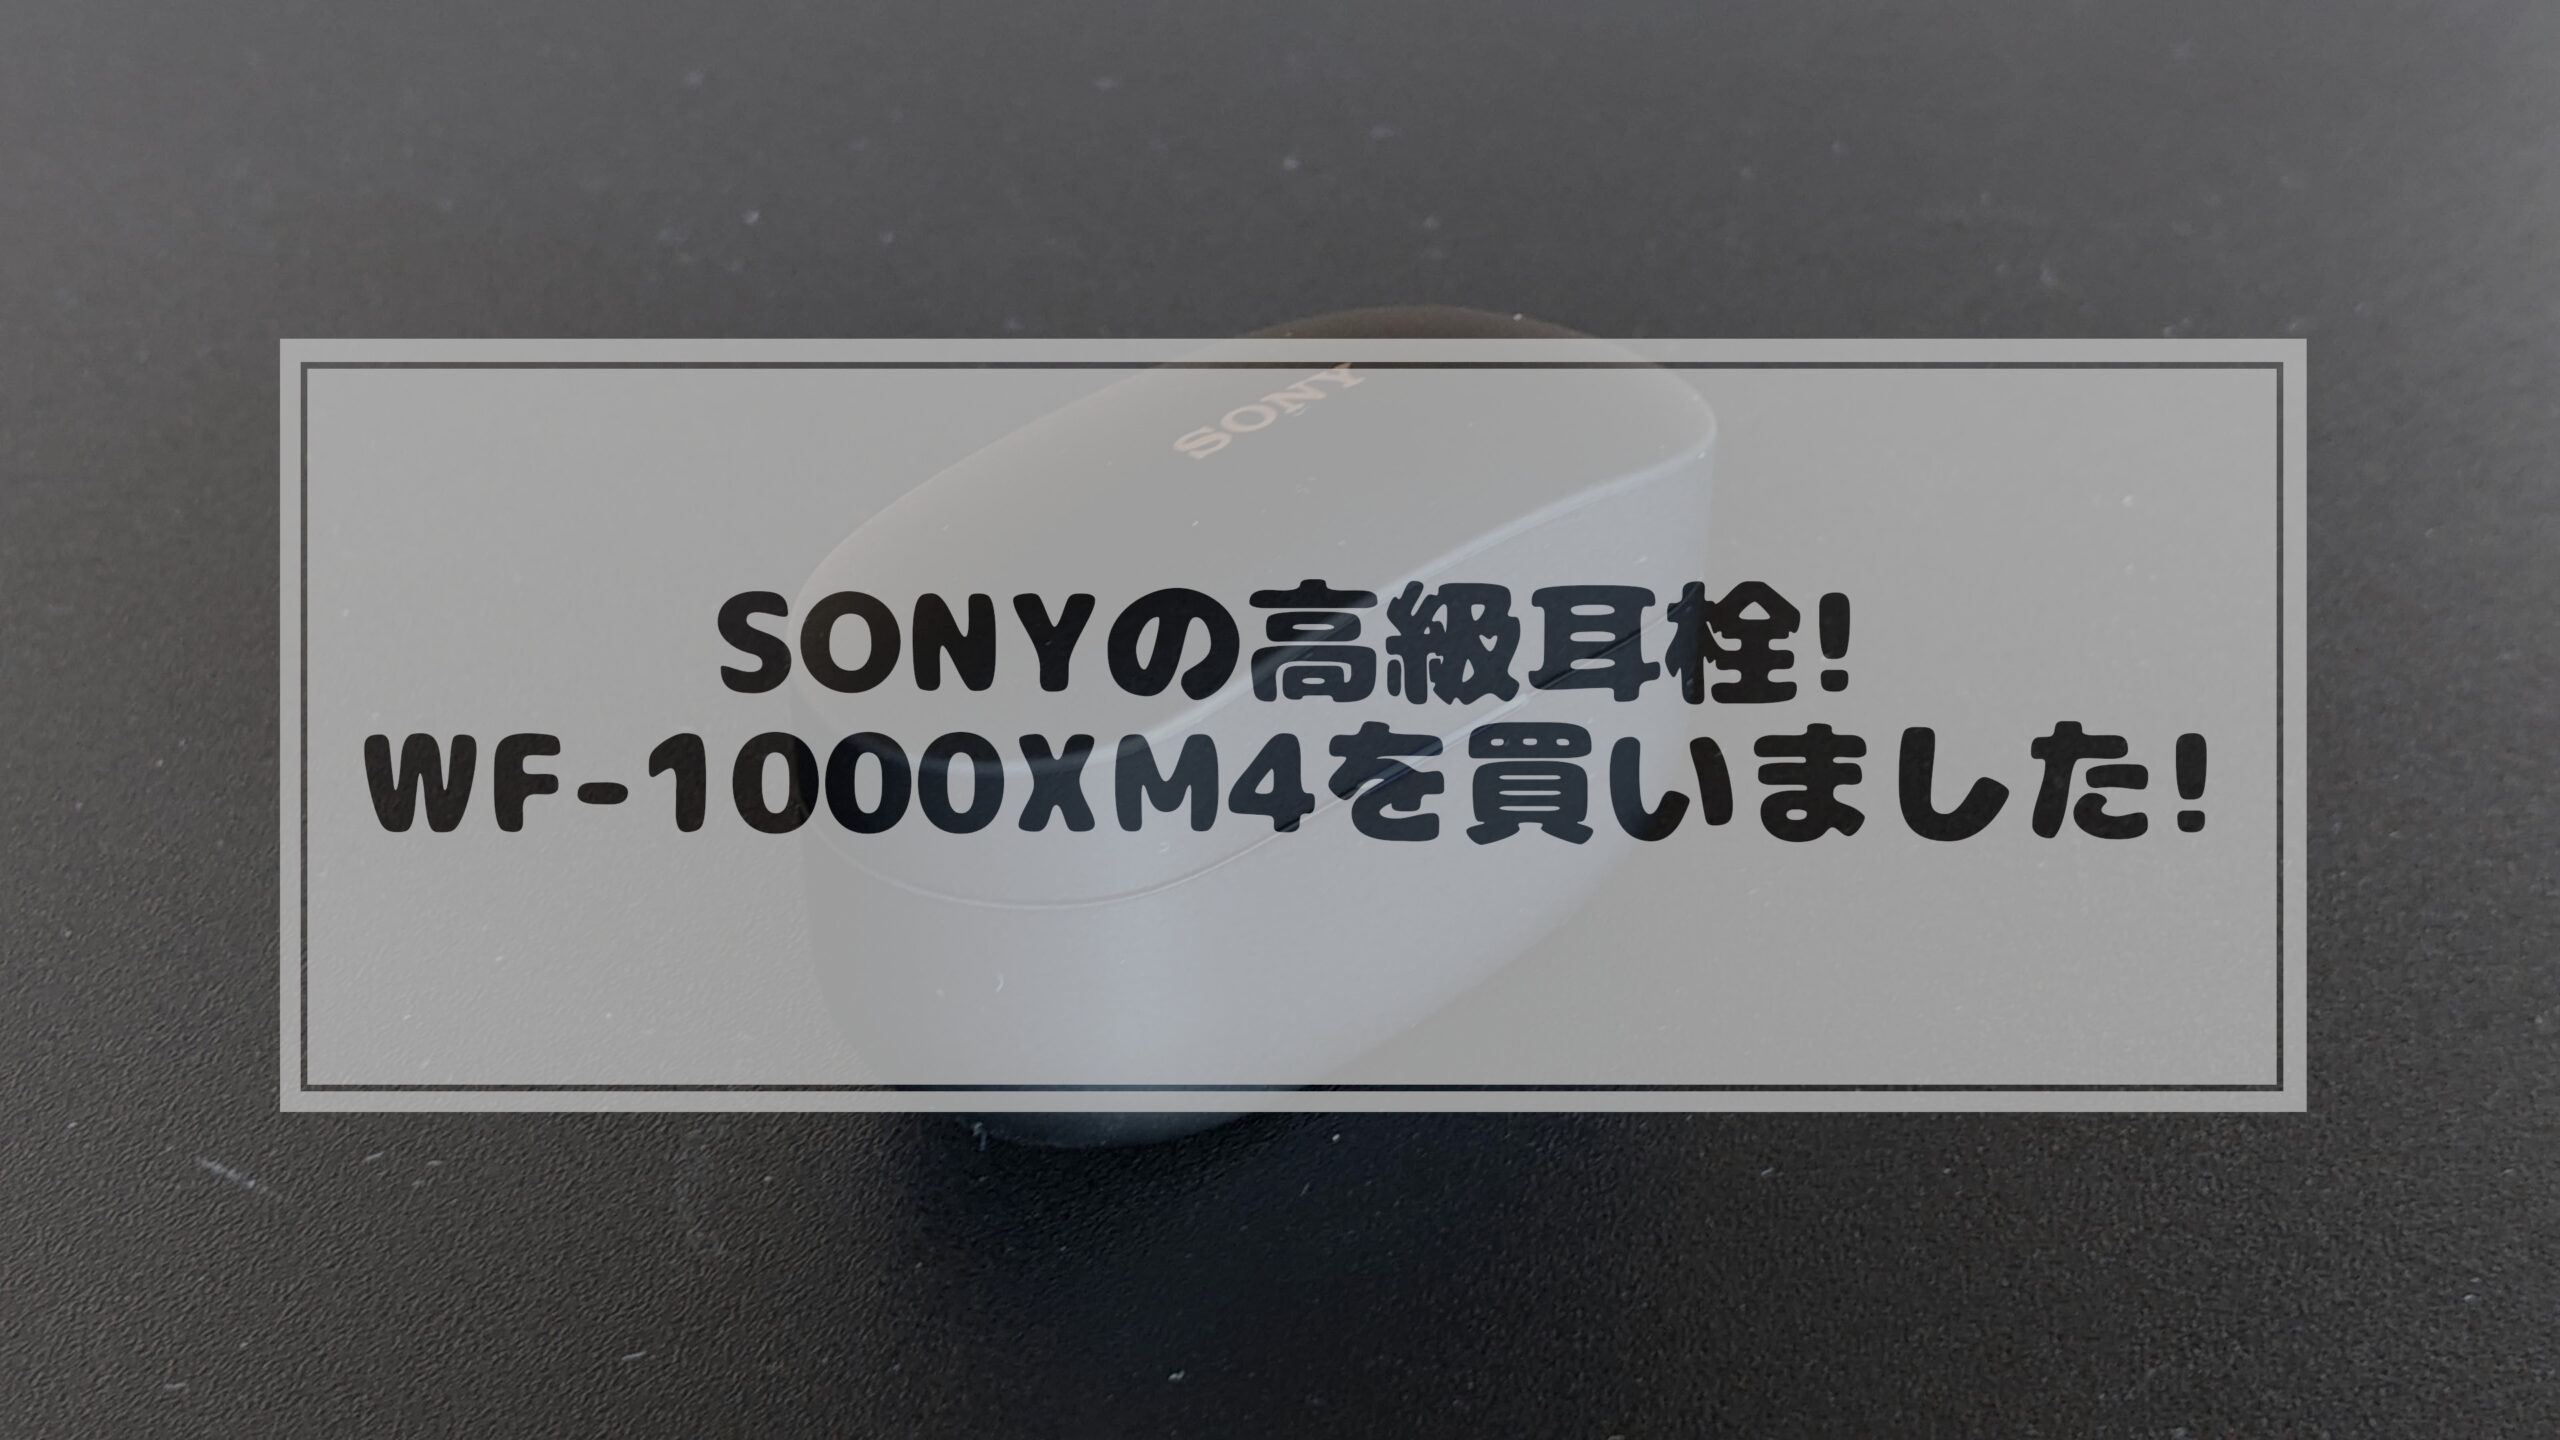 You are currently viewing SONYの高級耳栓を買ってしまいました！ WF-1000XM4(ワイヤレスイヤホン)